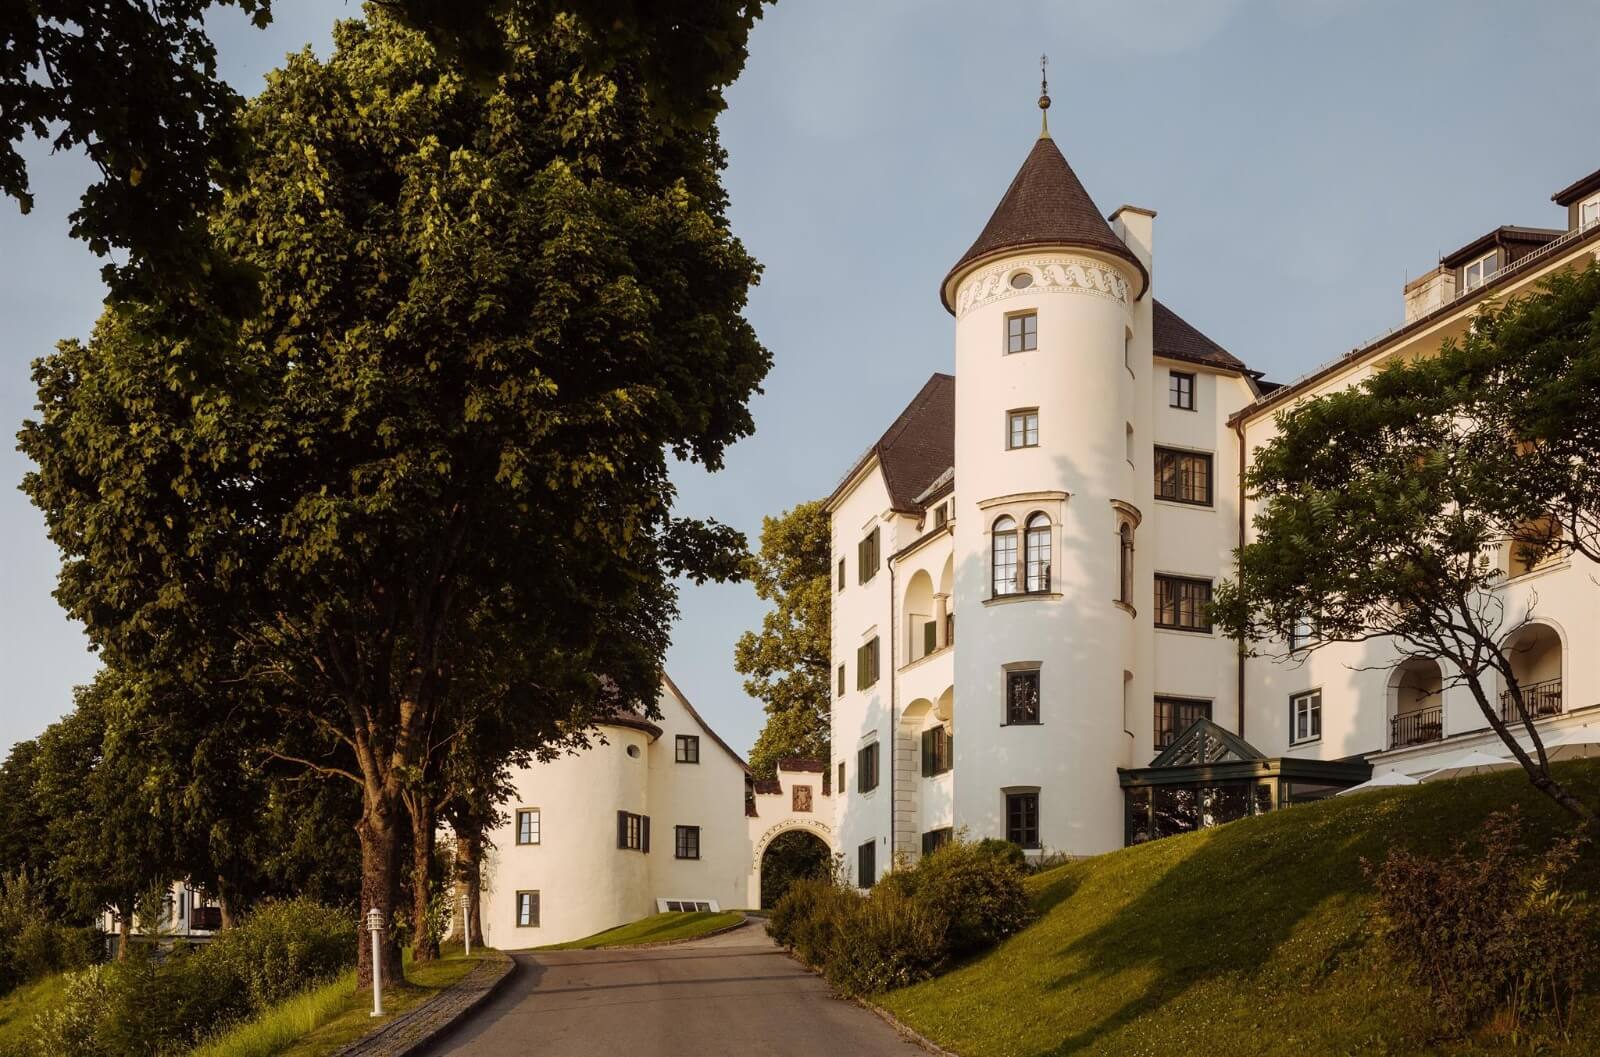 IMLAUER Hotel Schloss Pichlarn – A Top Luxury Hotel In Styria, Austria